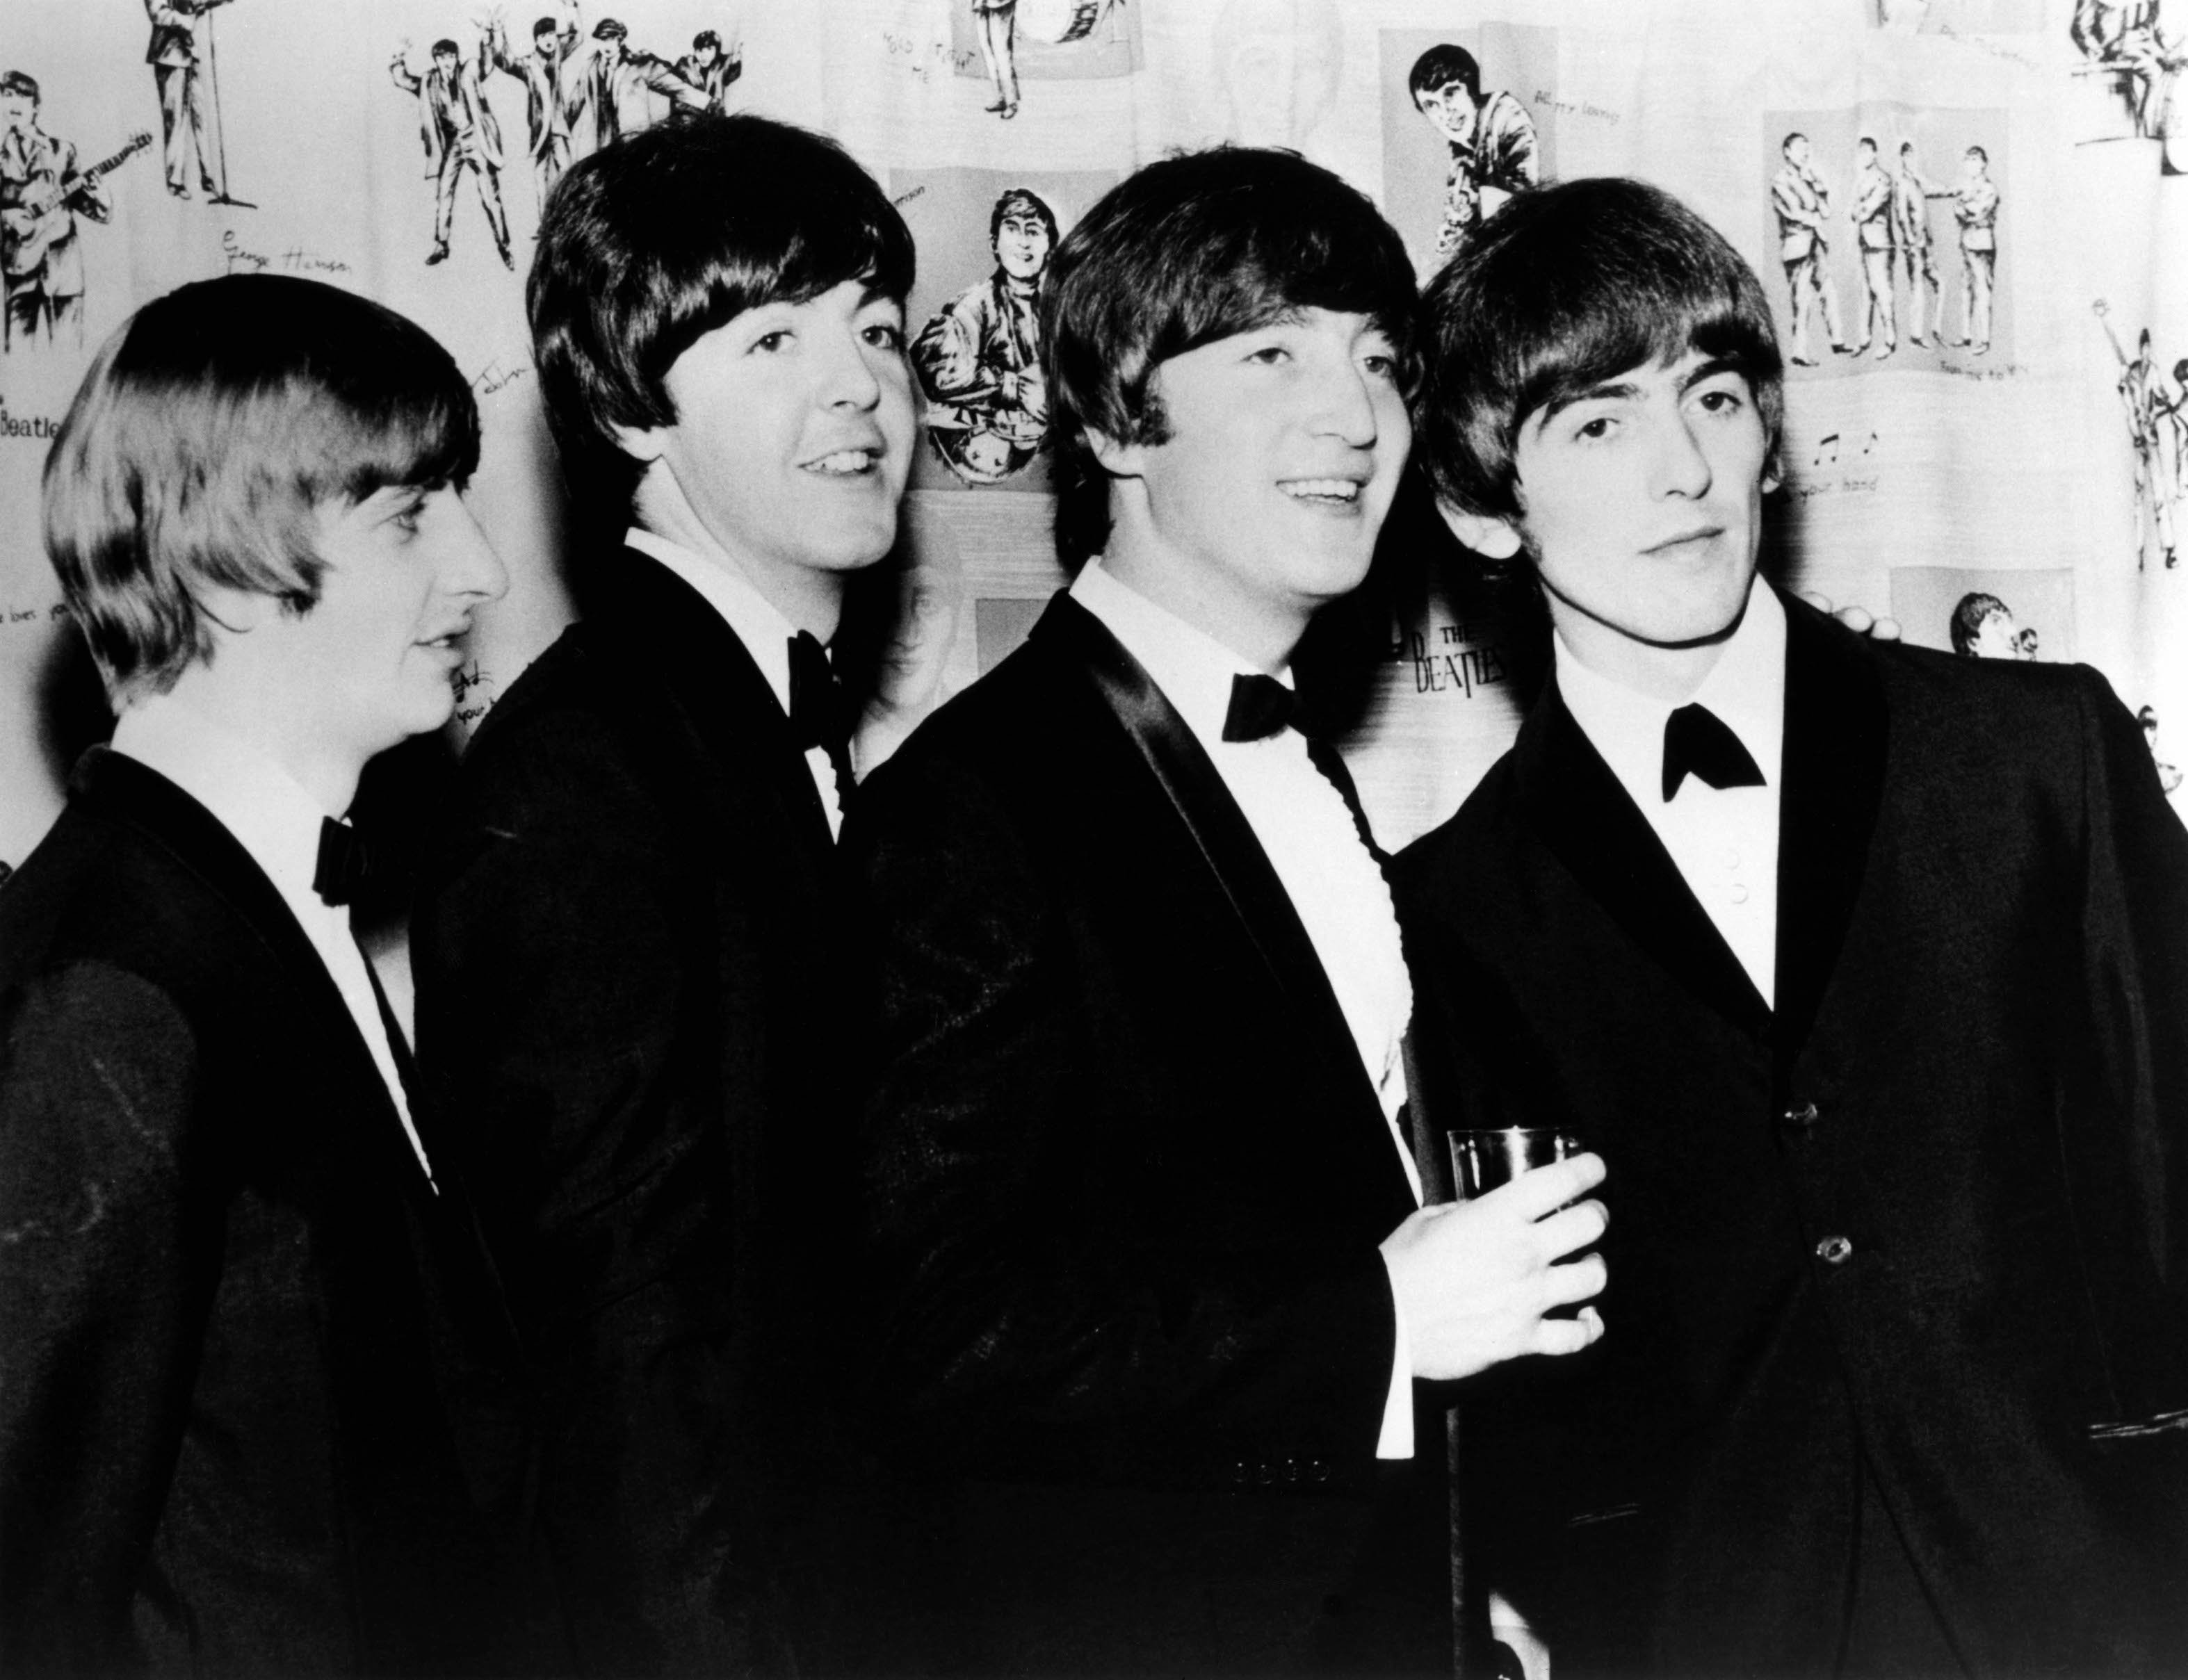 Ringo Starr, Paul McCartney, John Lennon, and George Harrison attend the premiere of The Beatles